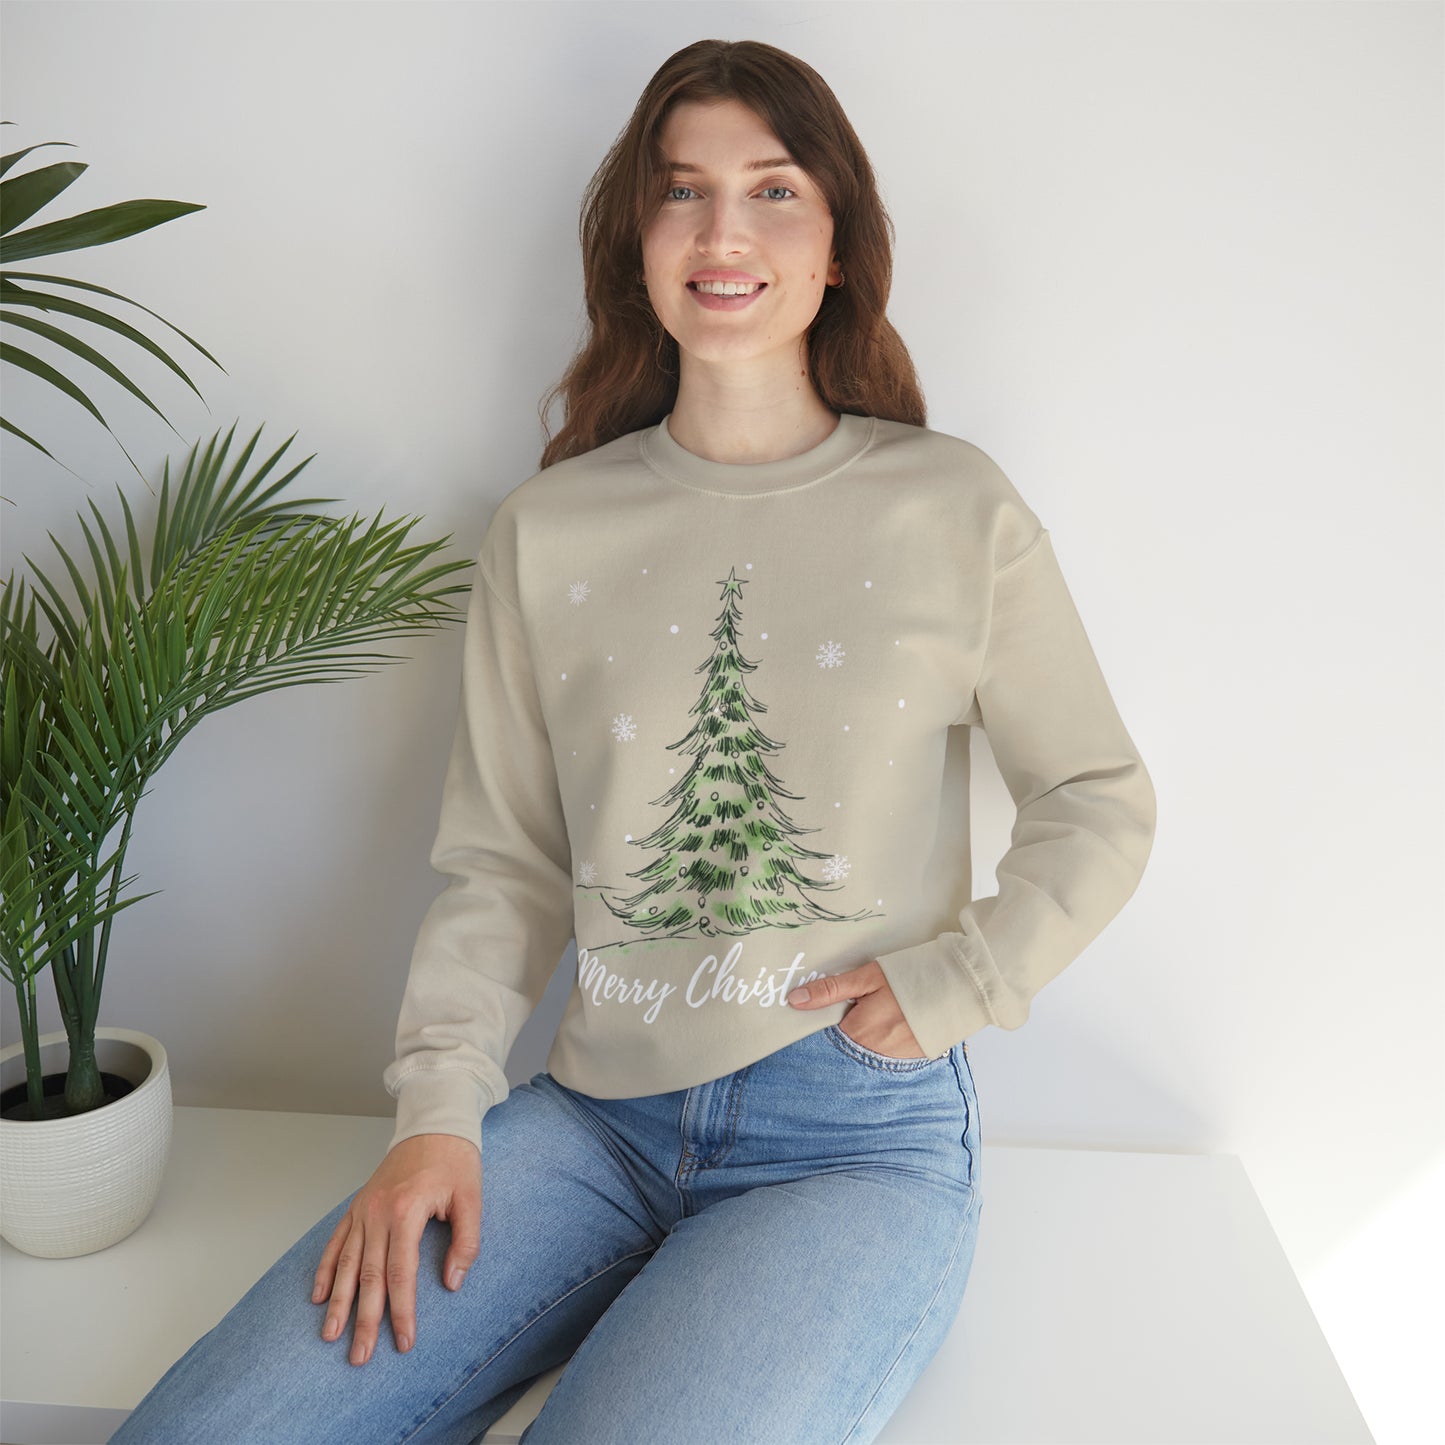 Merry Christmas Tree Crewneck Sweatshirt (Season)